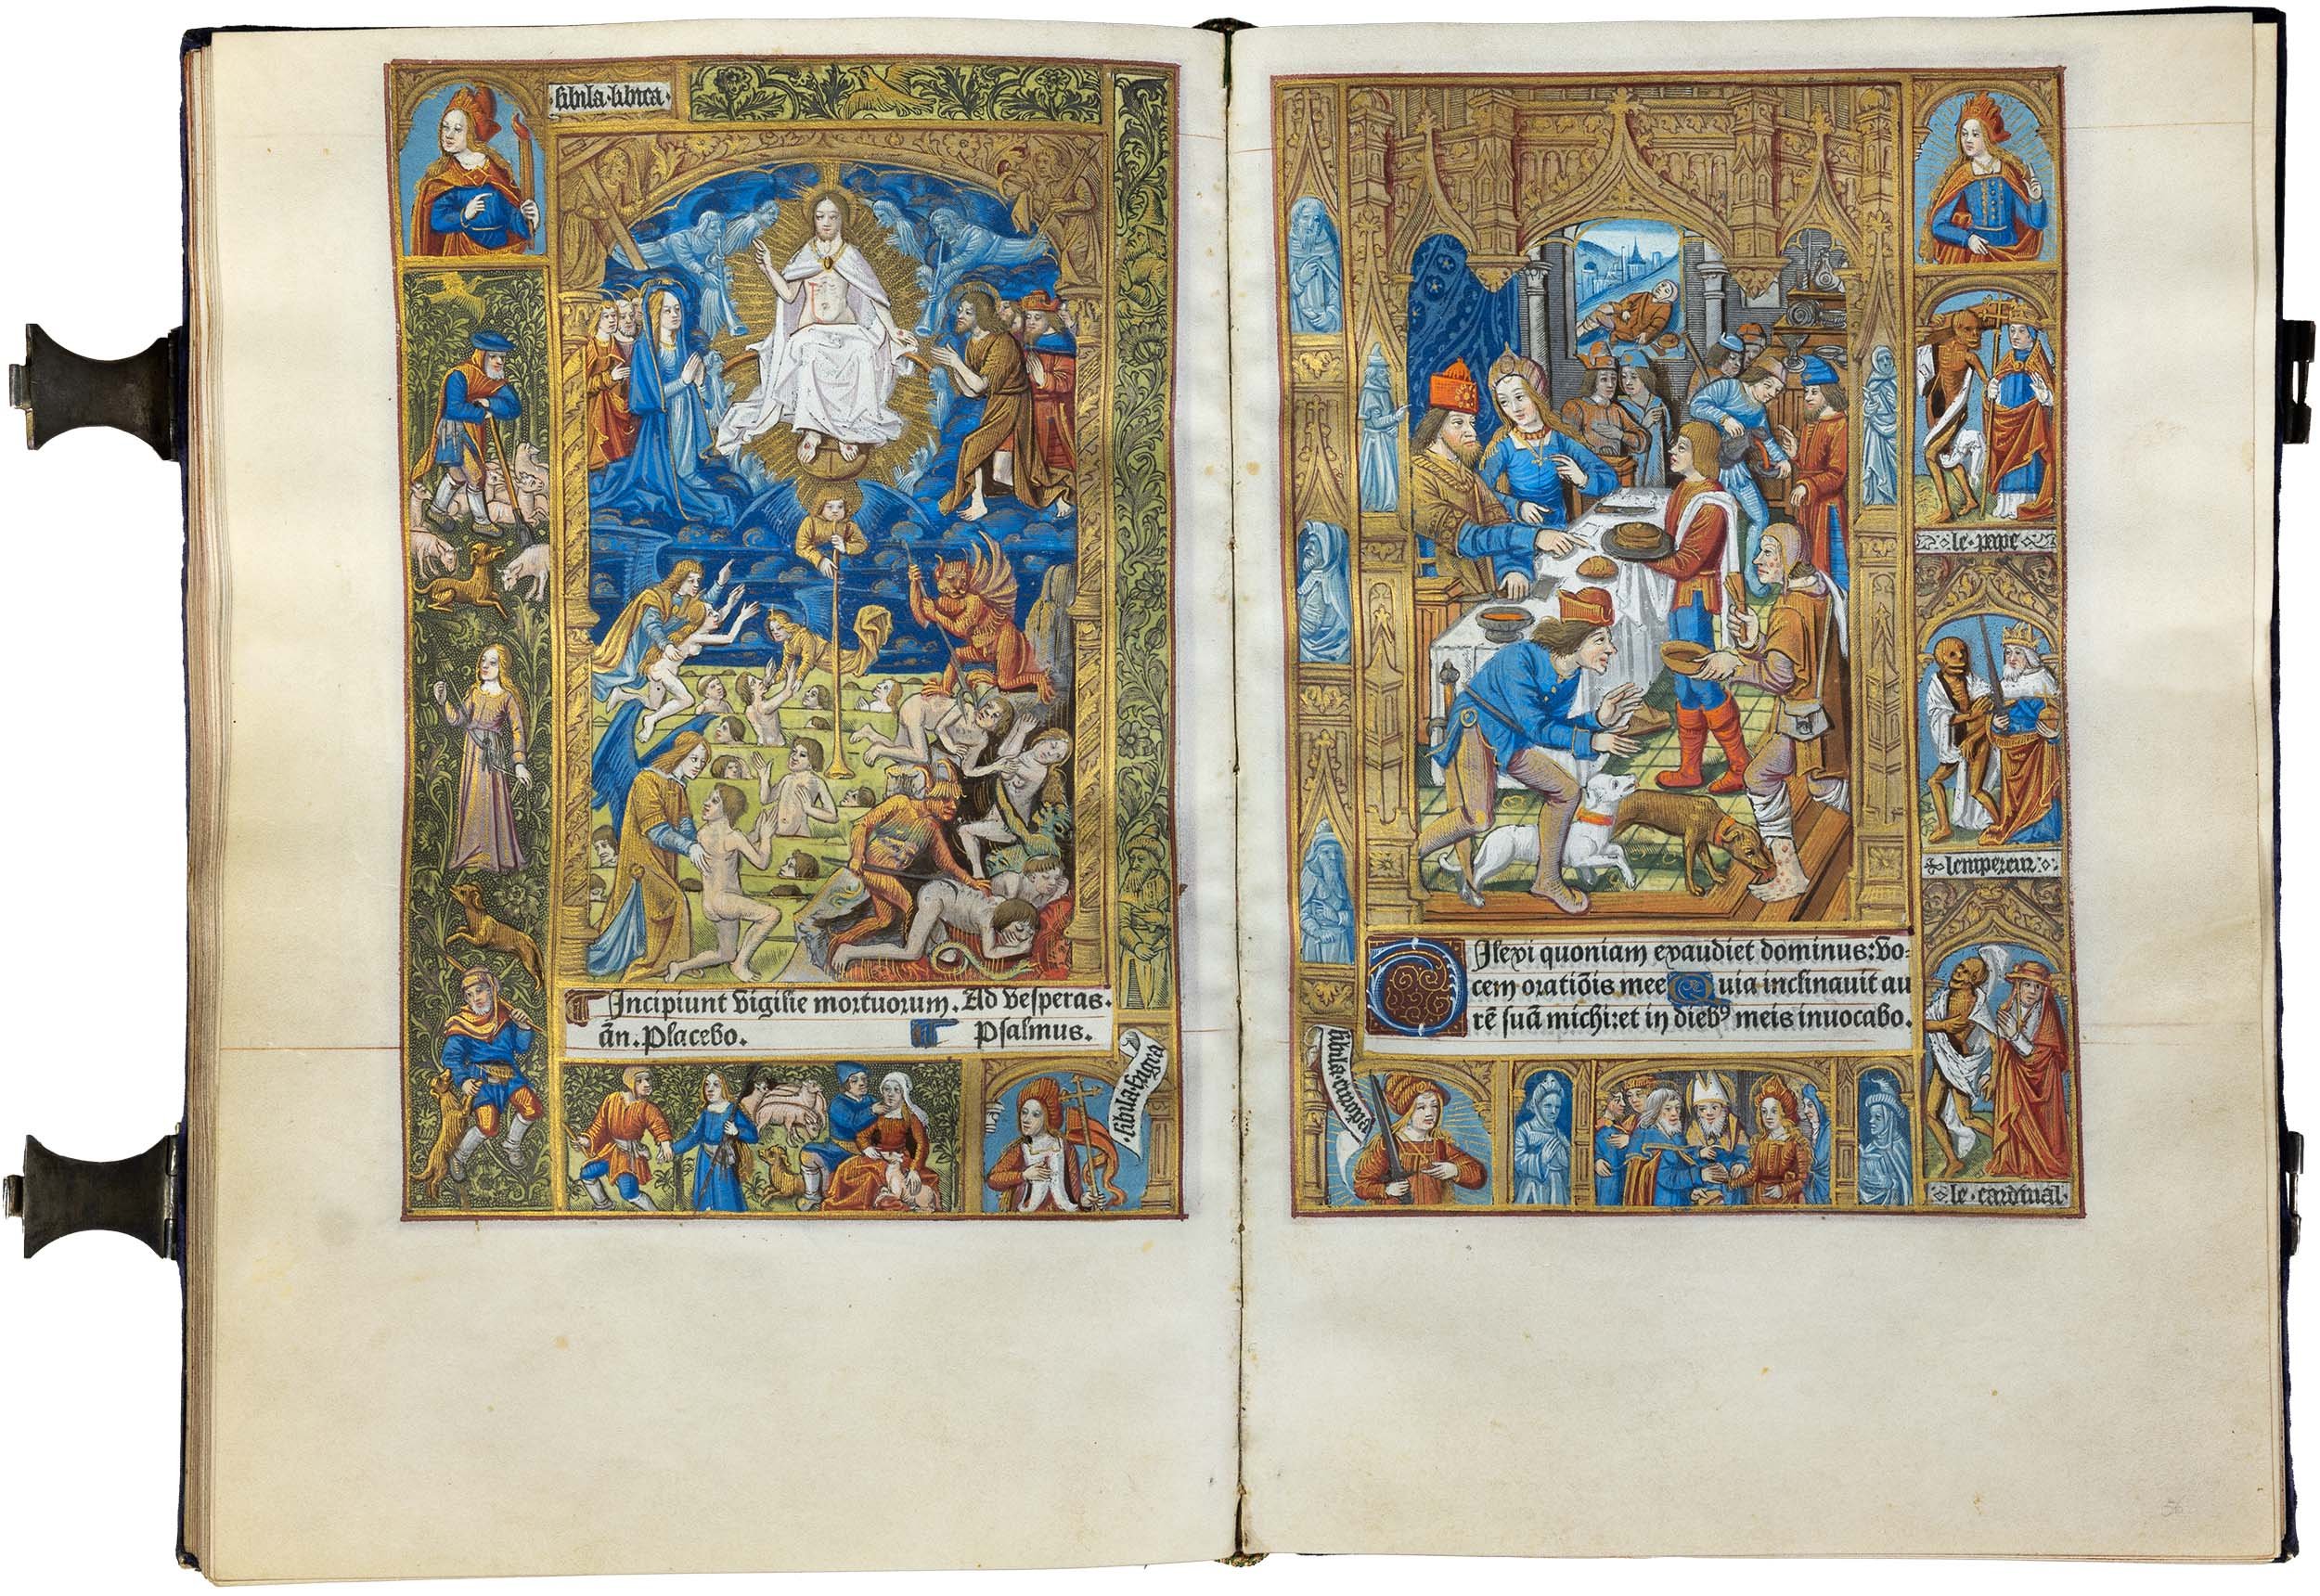 horae-bmv-16.9.1498-printed-book-of-hours-pigouchet-vostre-calixto crotus-illuminated-vellum-doheny-arcana-42.jpg